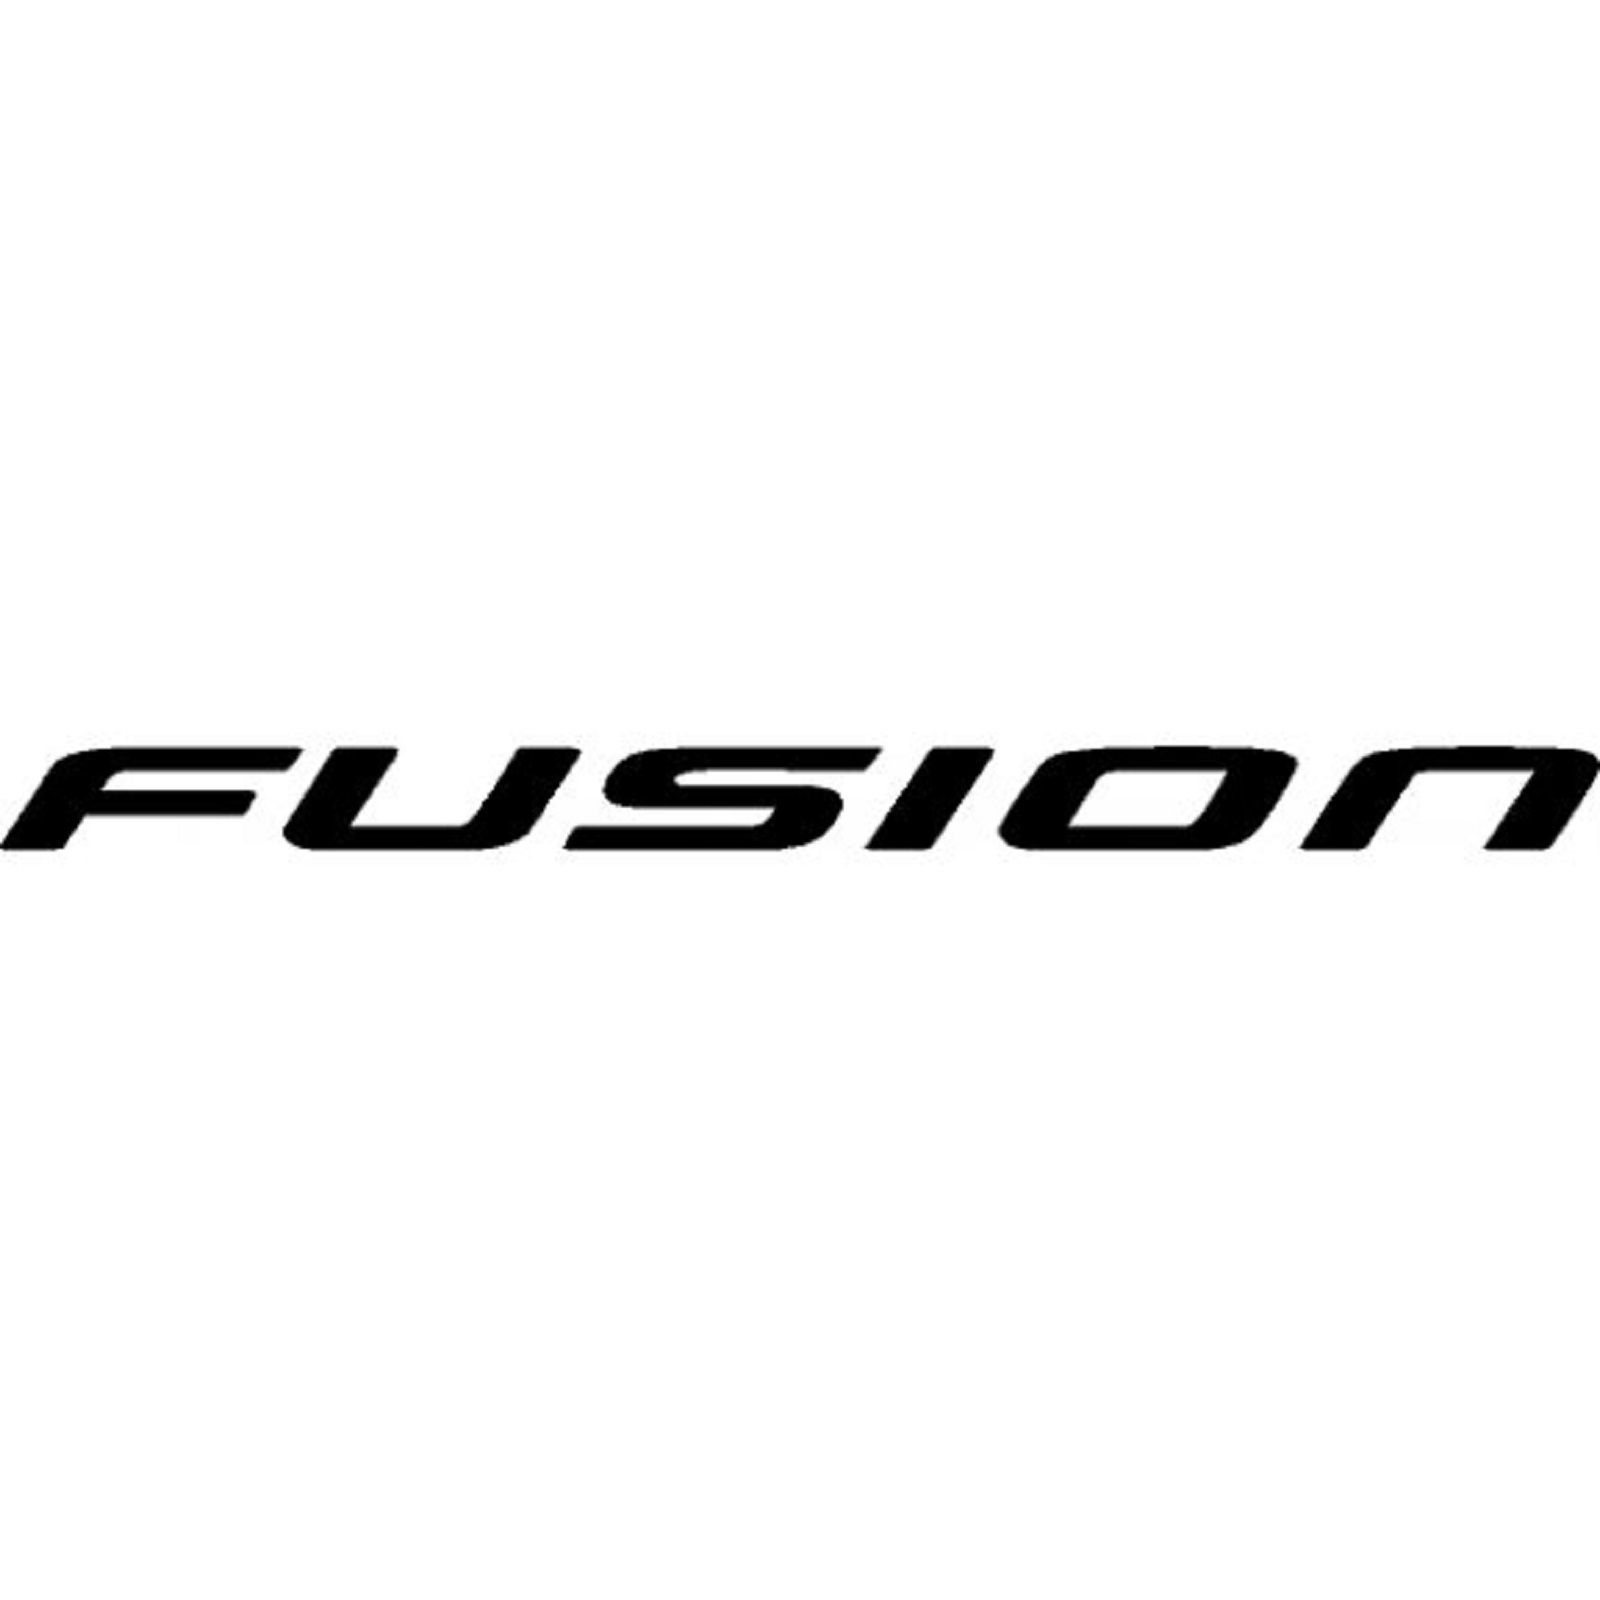 Ford fusion logo